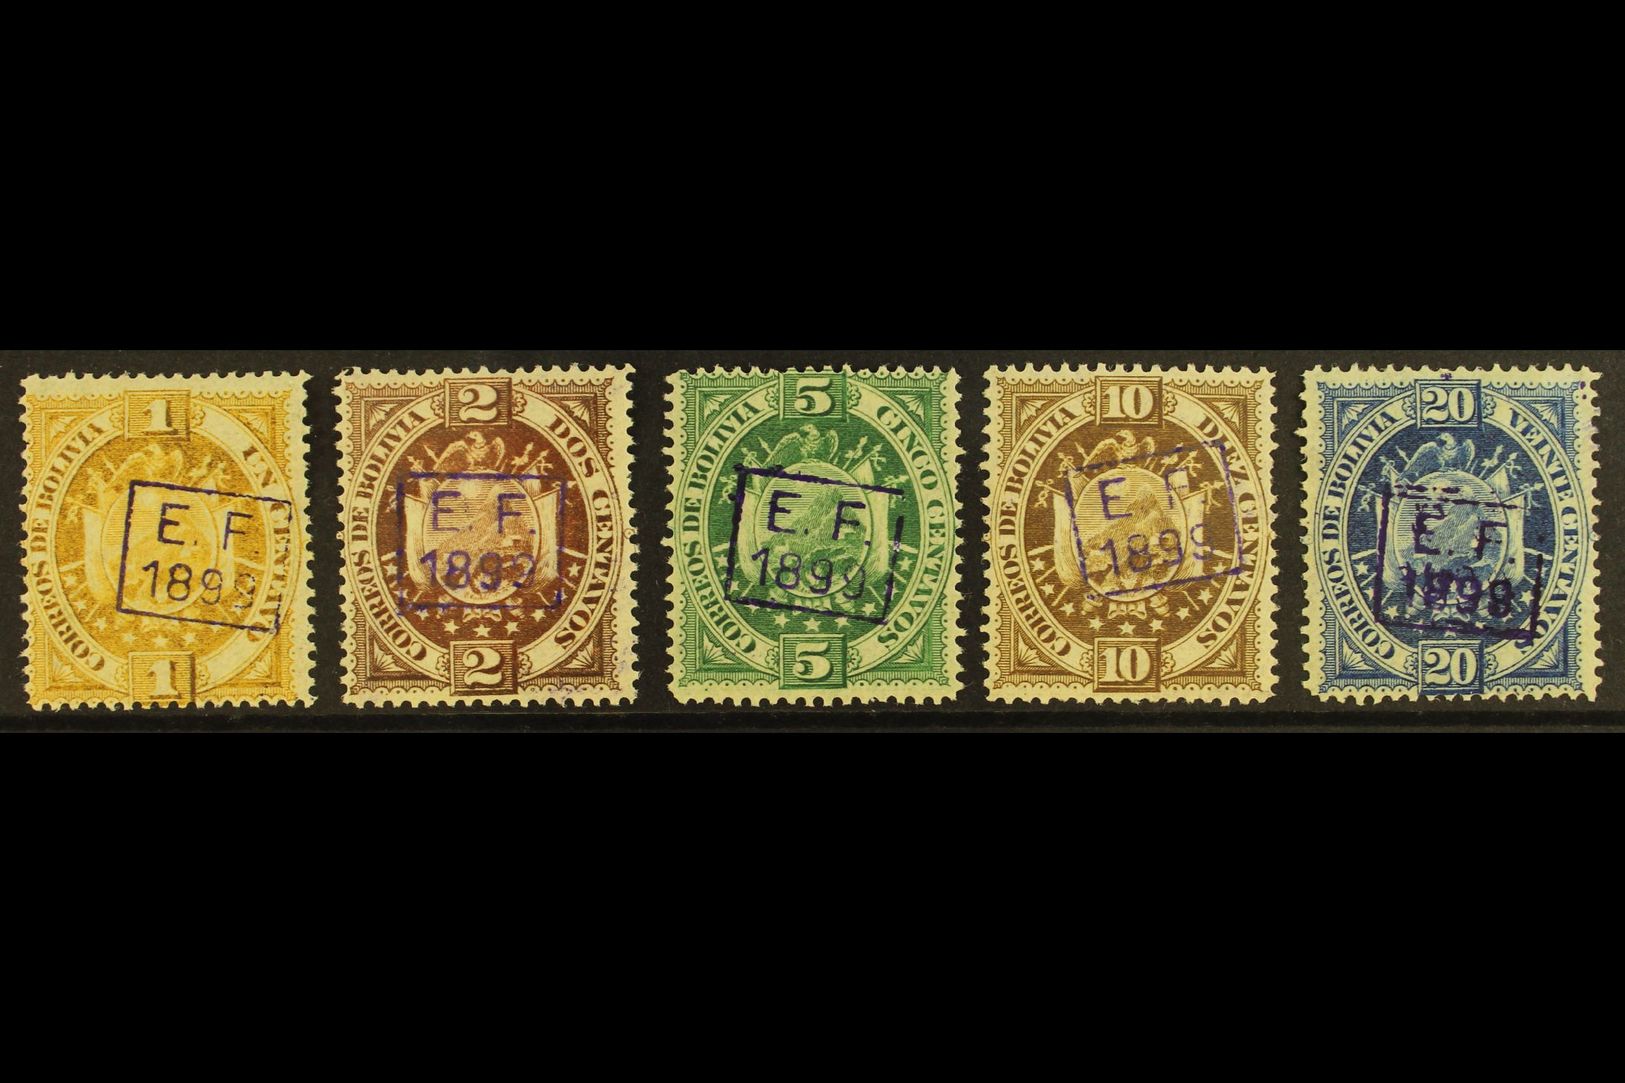 1899  Boxed "E.F. 1899" Overprints, Complete Set, Scott 55/9, Fine Mint (5). For More Images, Please Visit Http://www.sa - Bolivia